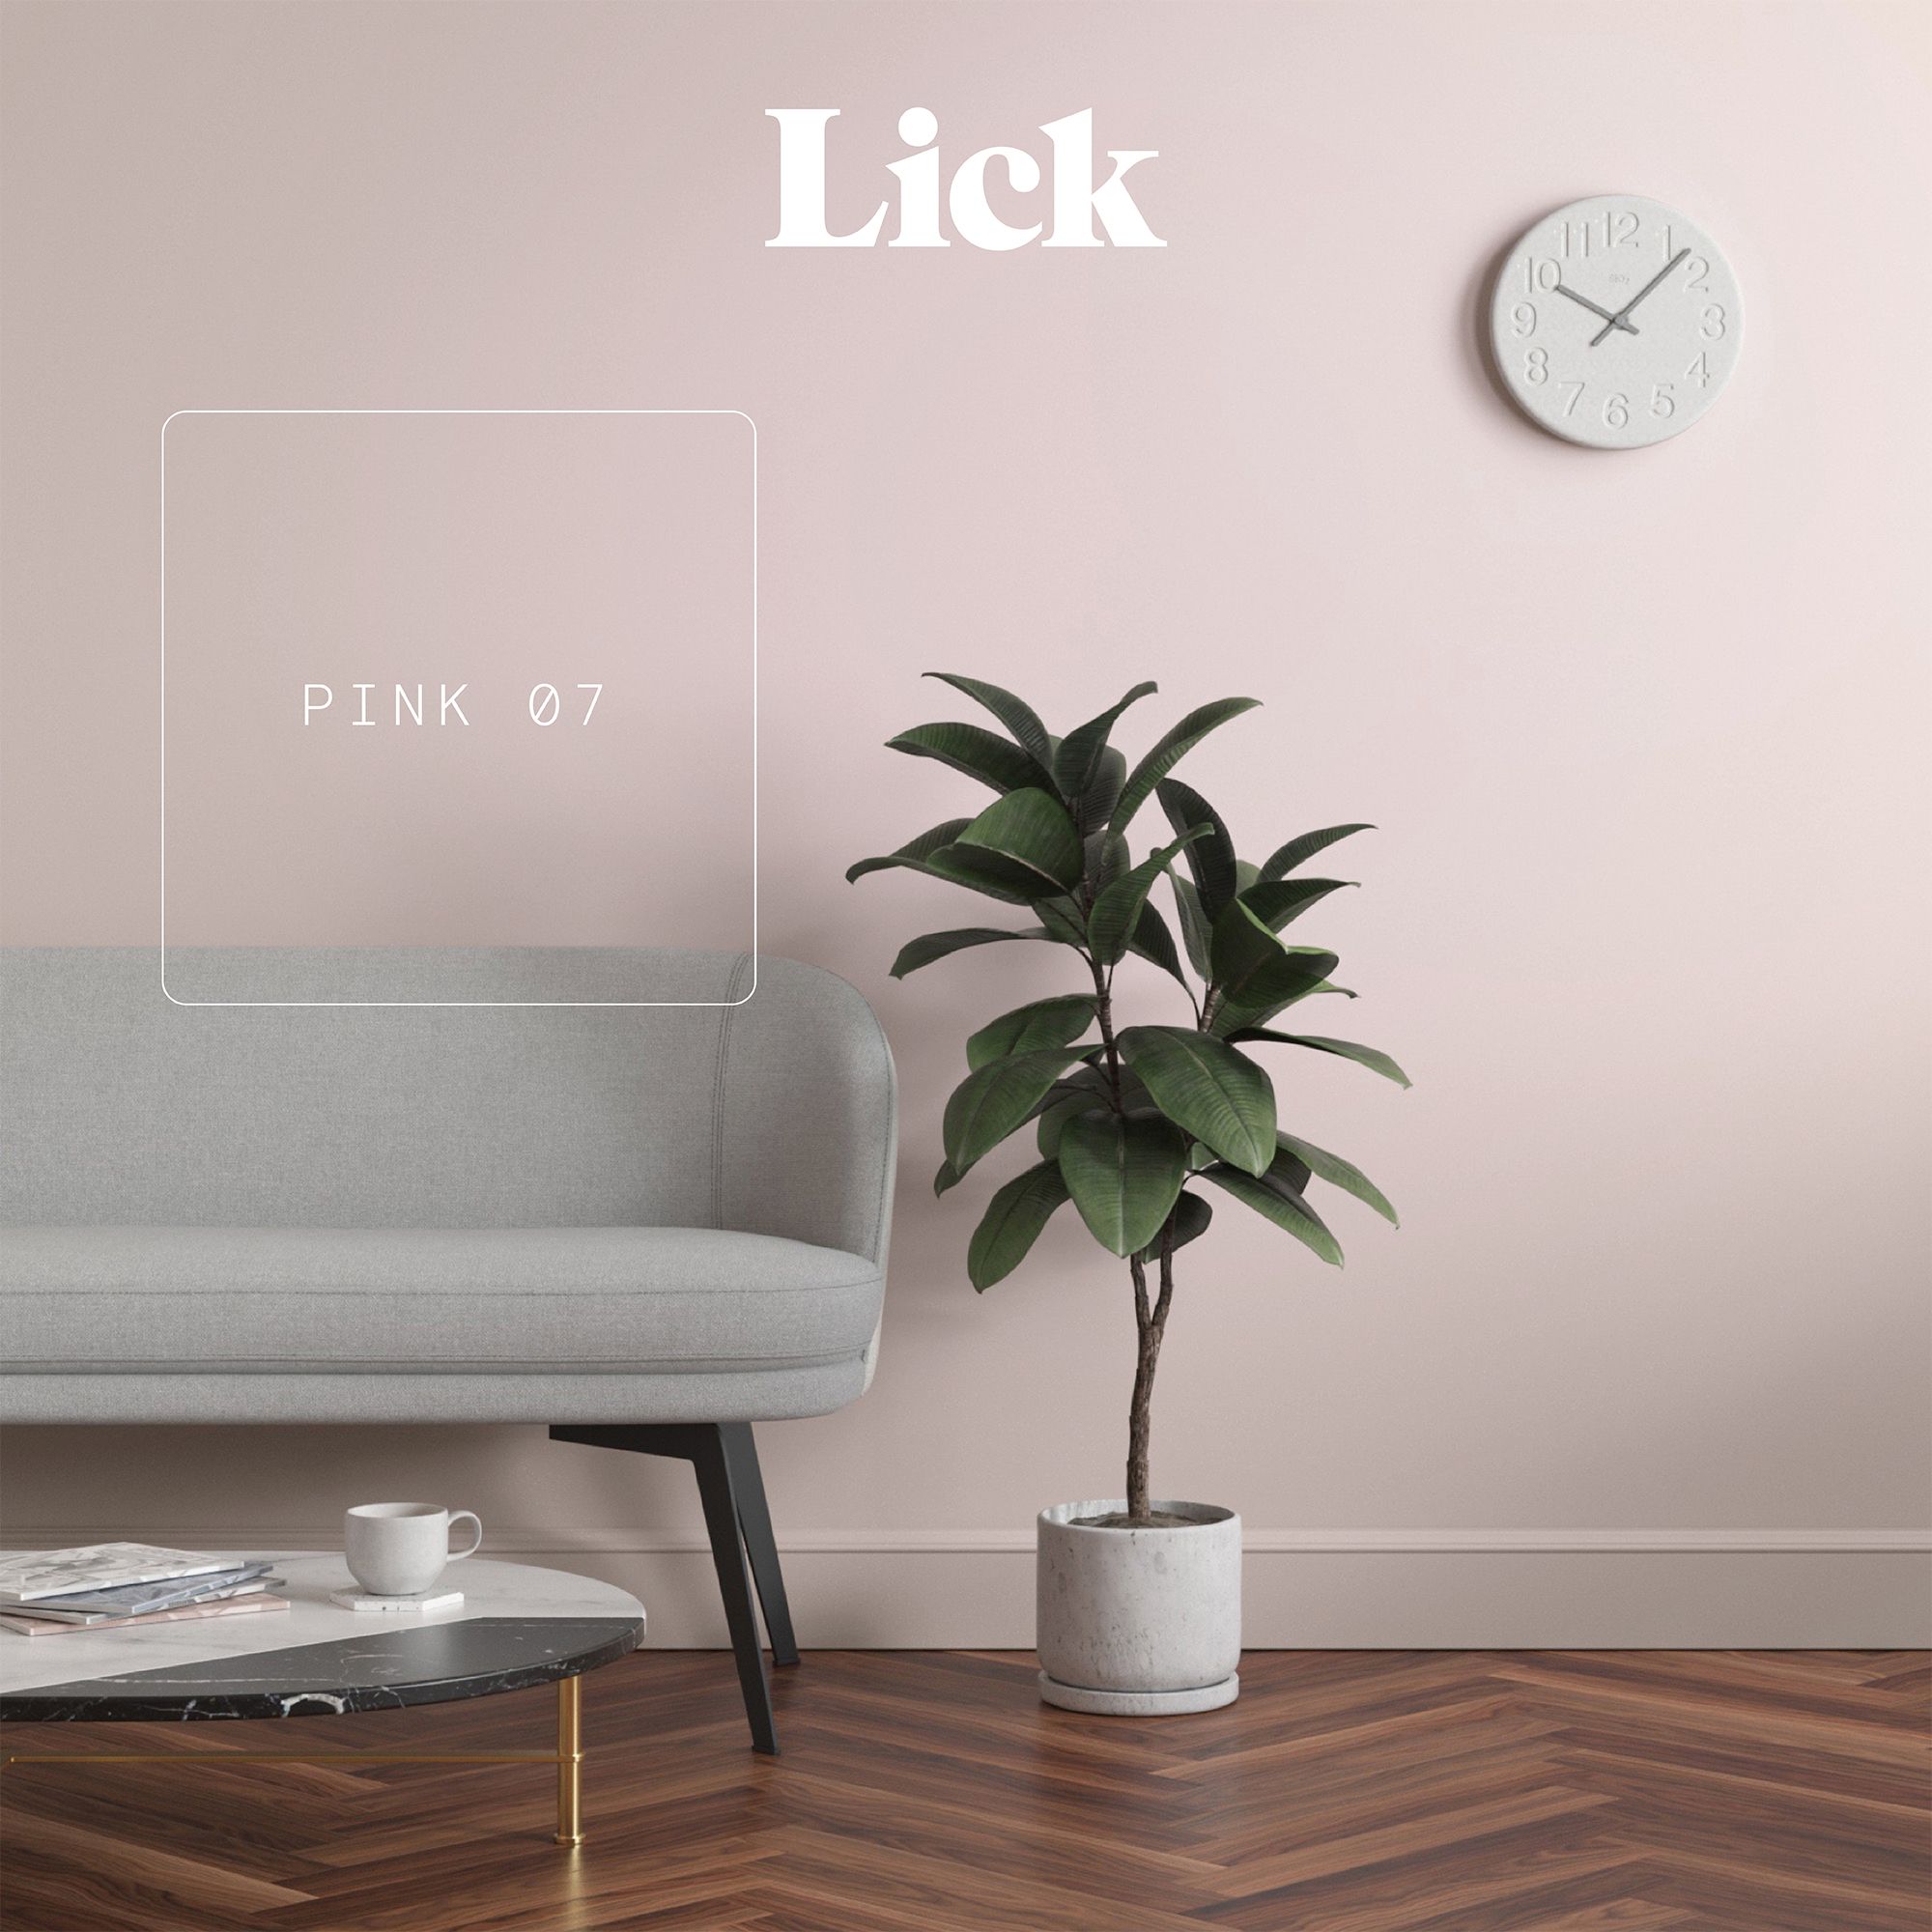 Lick Pink 07 Matt Emulsion paint, 2.5L